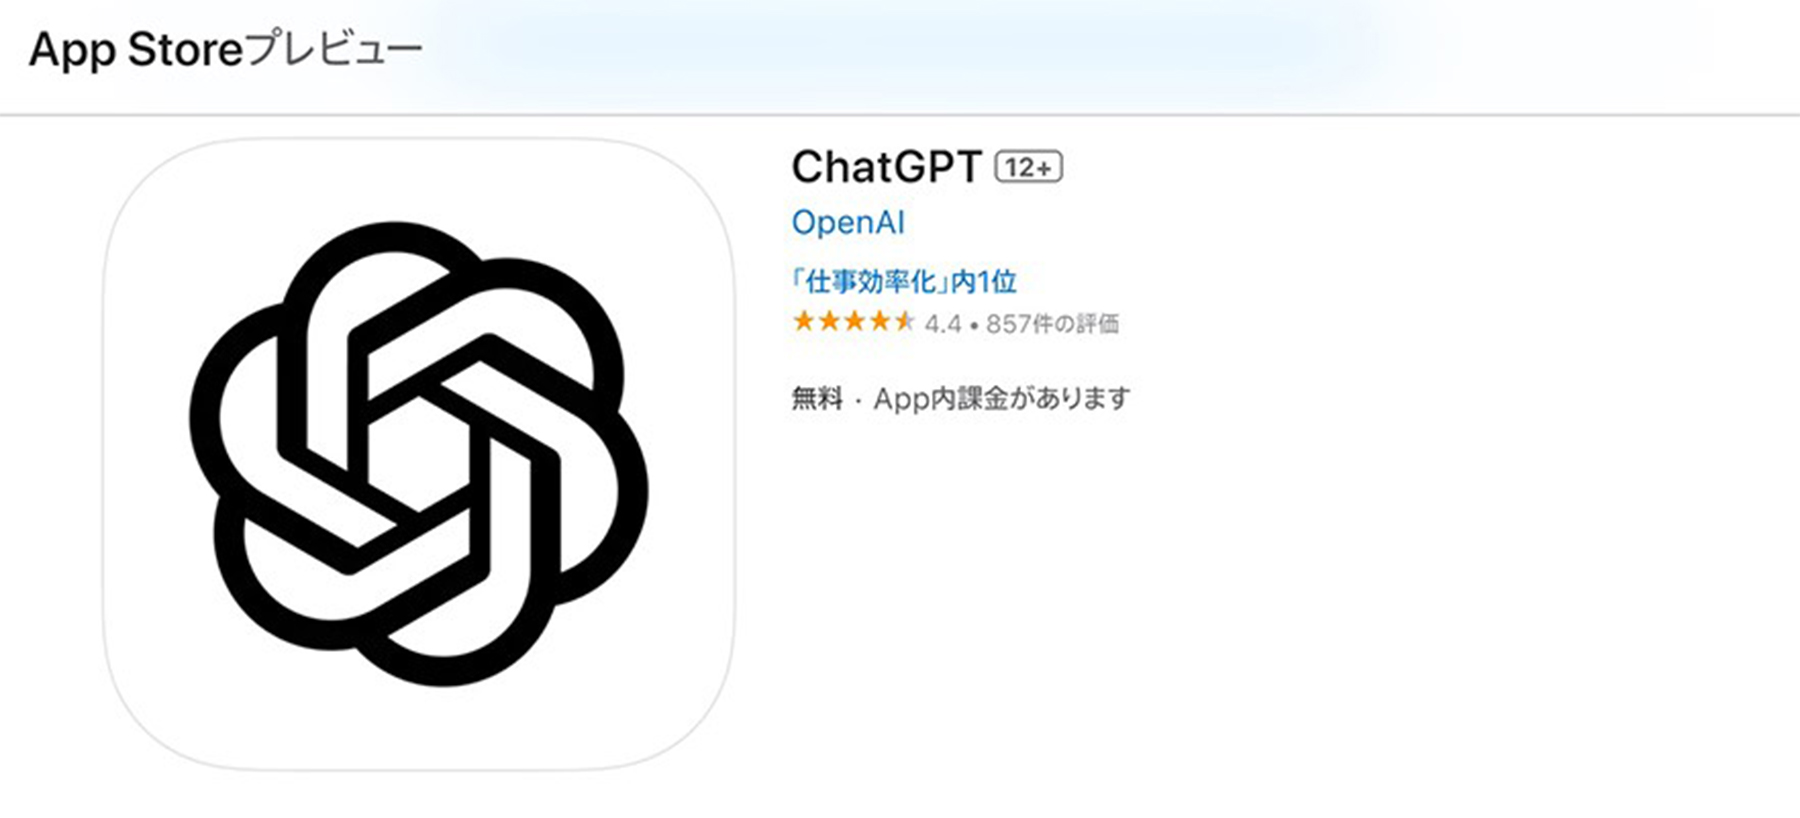 ChatGPTはスマホアプリ版でも始められる